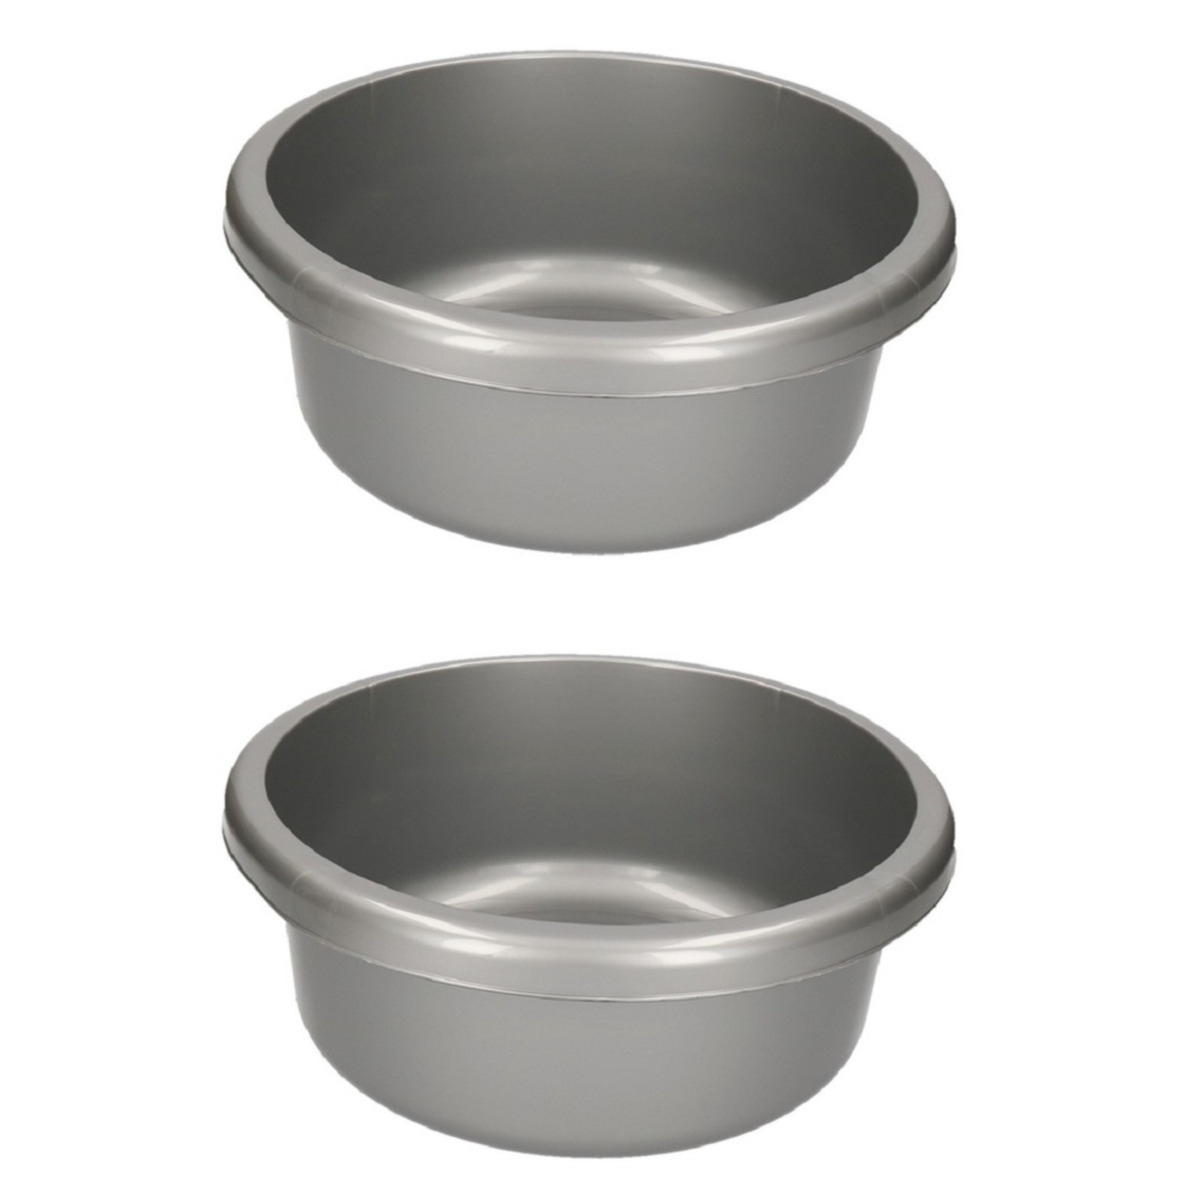 2x stuks rond afwasteiltje-afwasbak donker grijs 6,2 liter